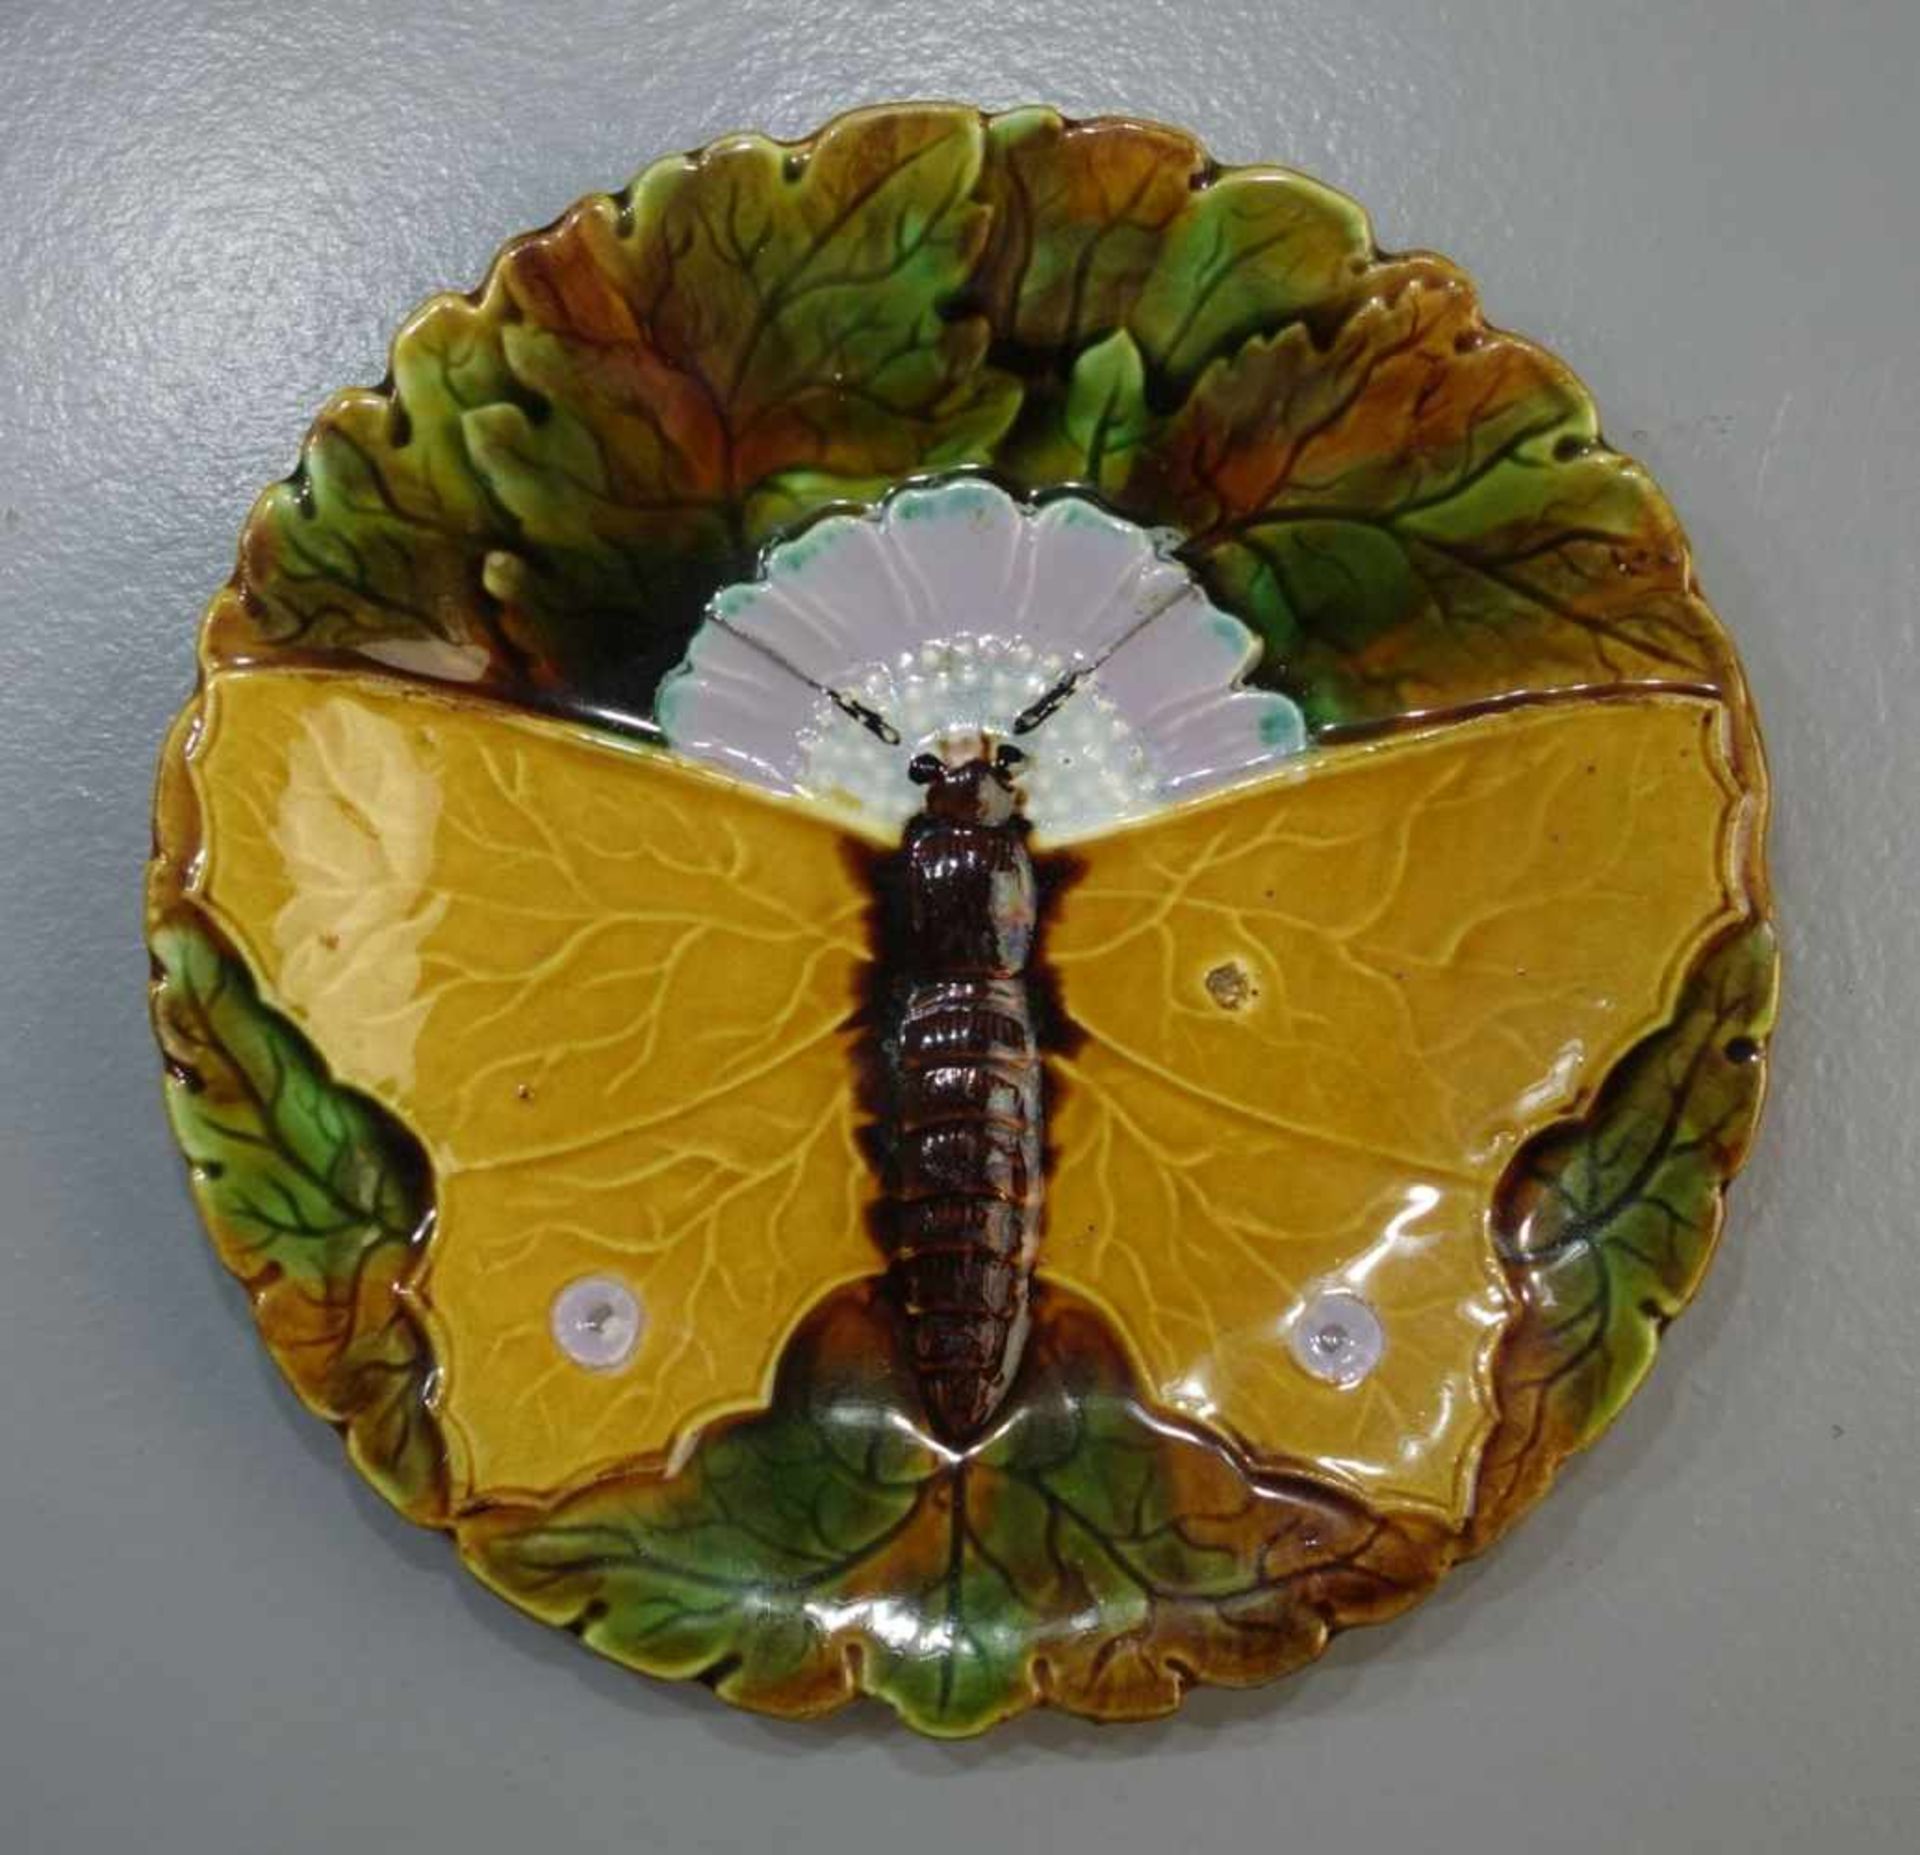 6 JUGENDSTIL TELLER / DESSERTTELLER MIT FALTERMOTIV / art nouveau plates with butterfly motif, - Bild 2 aus 3